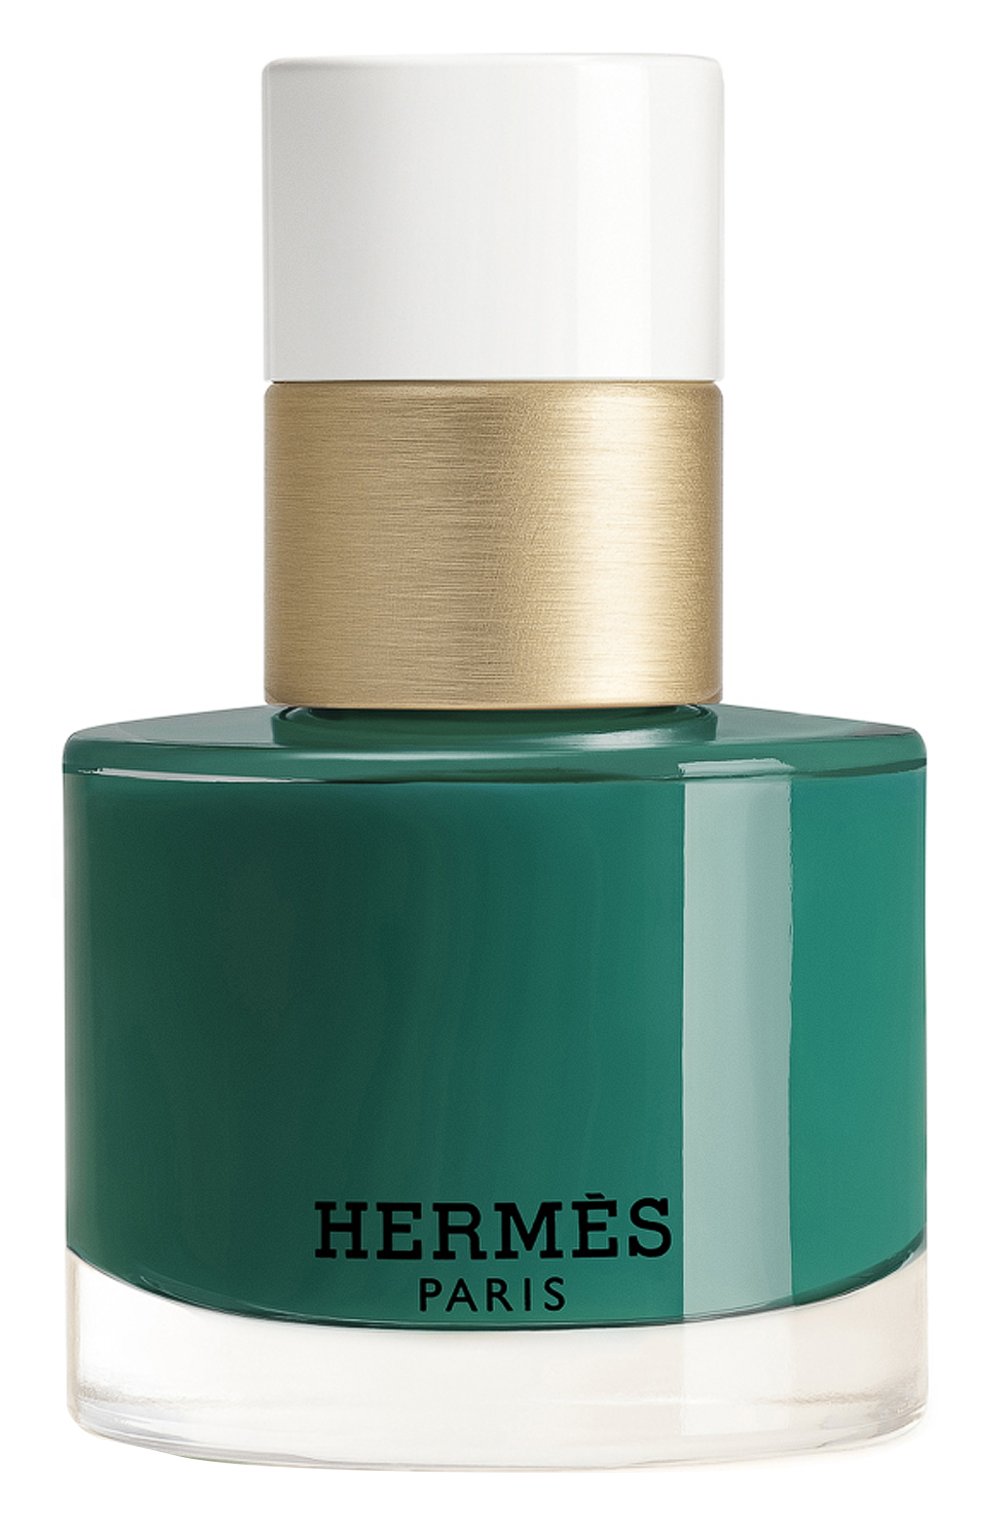 Лак для ногтей les mains hermès, vert égyptien (15ml) HERMÈS  цвета, арт. 60301VV065H | Фото 1